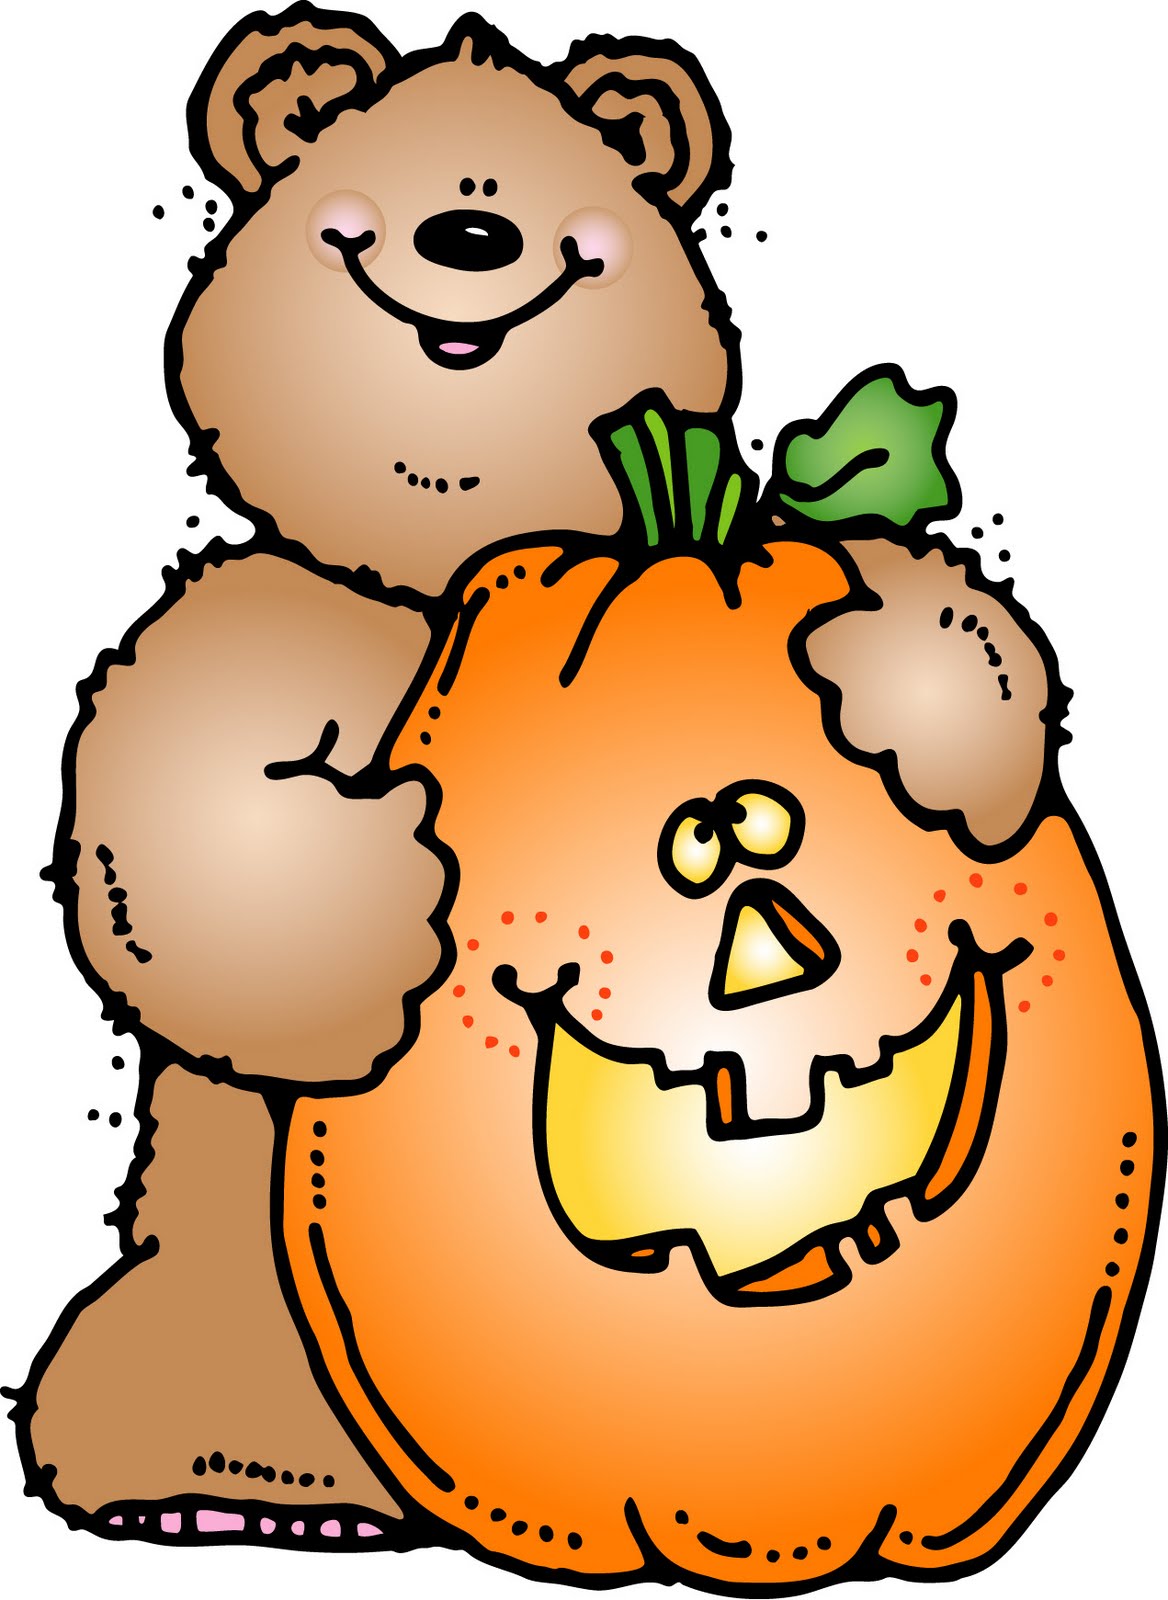 Pumpkin patch clipart free download clip art